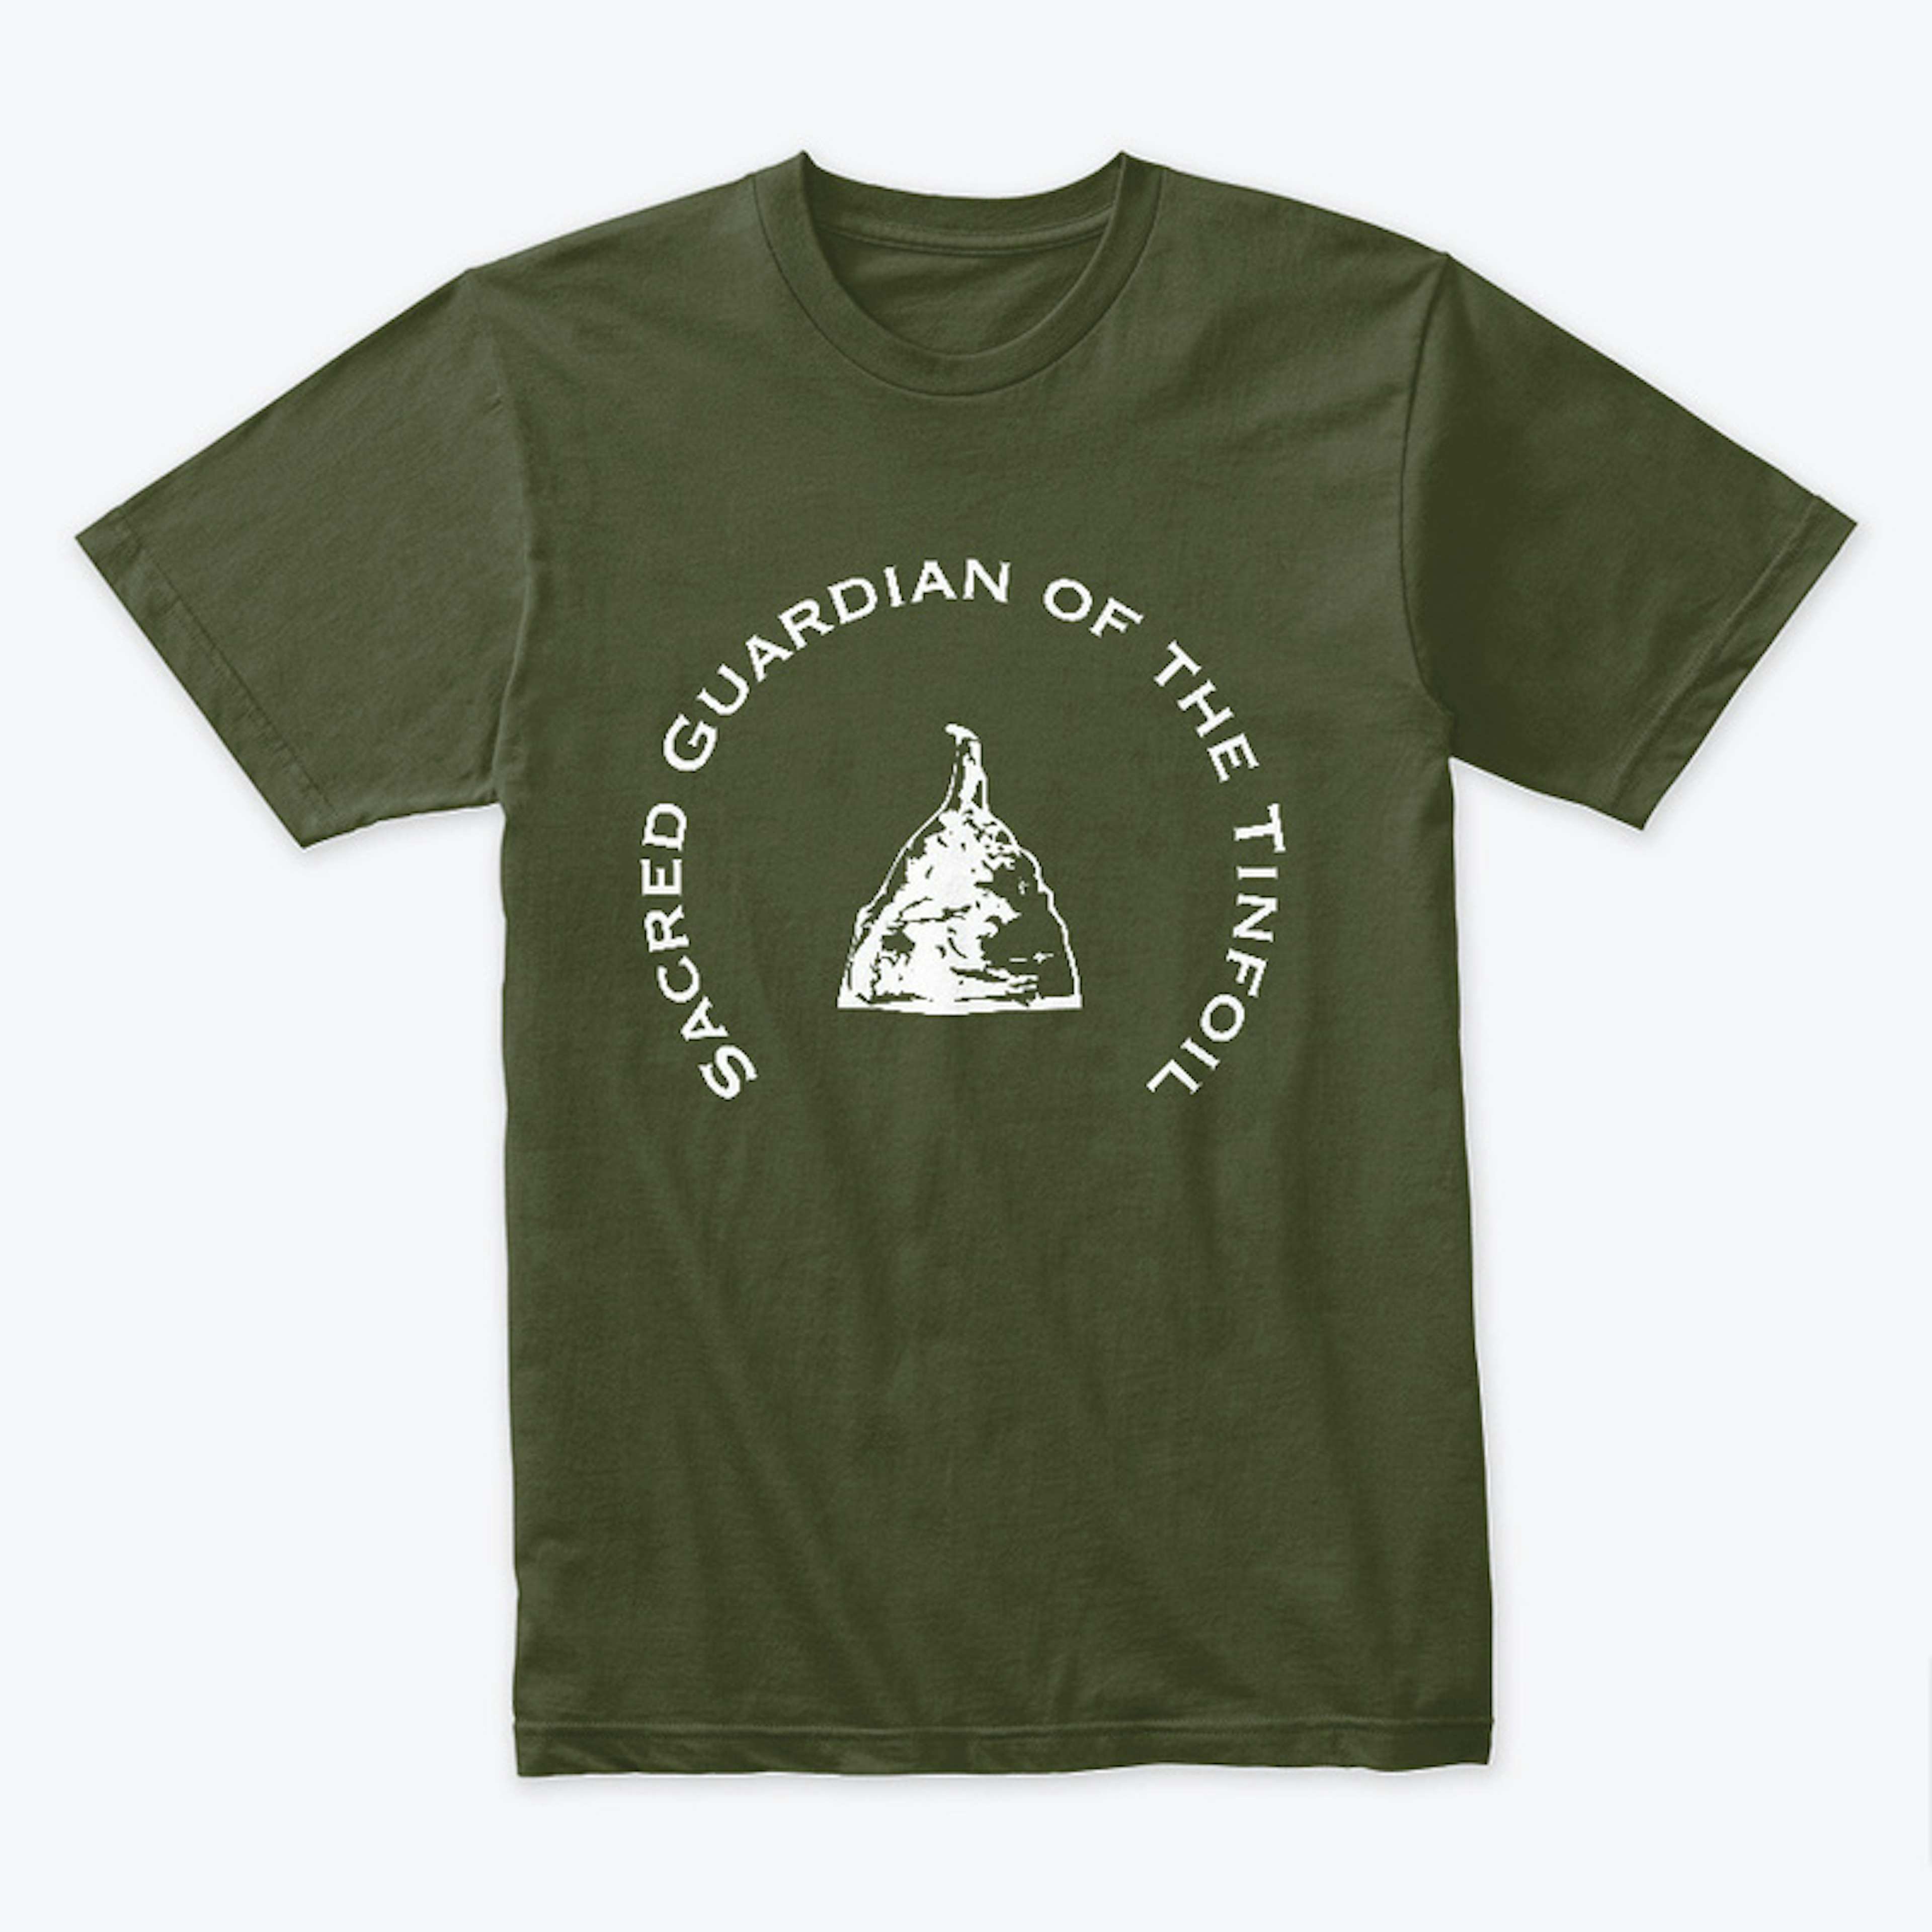 Sacred guardian of the tinfoil - T-shirt